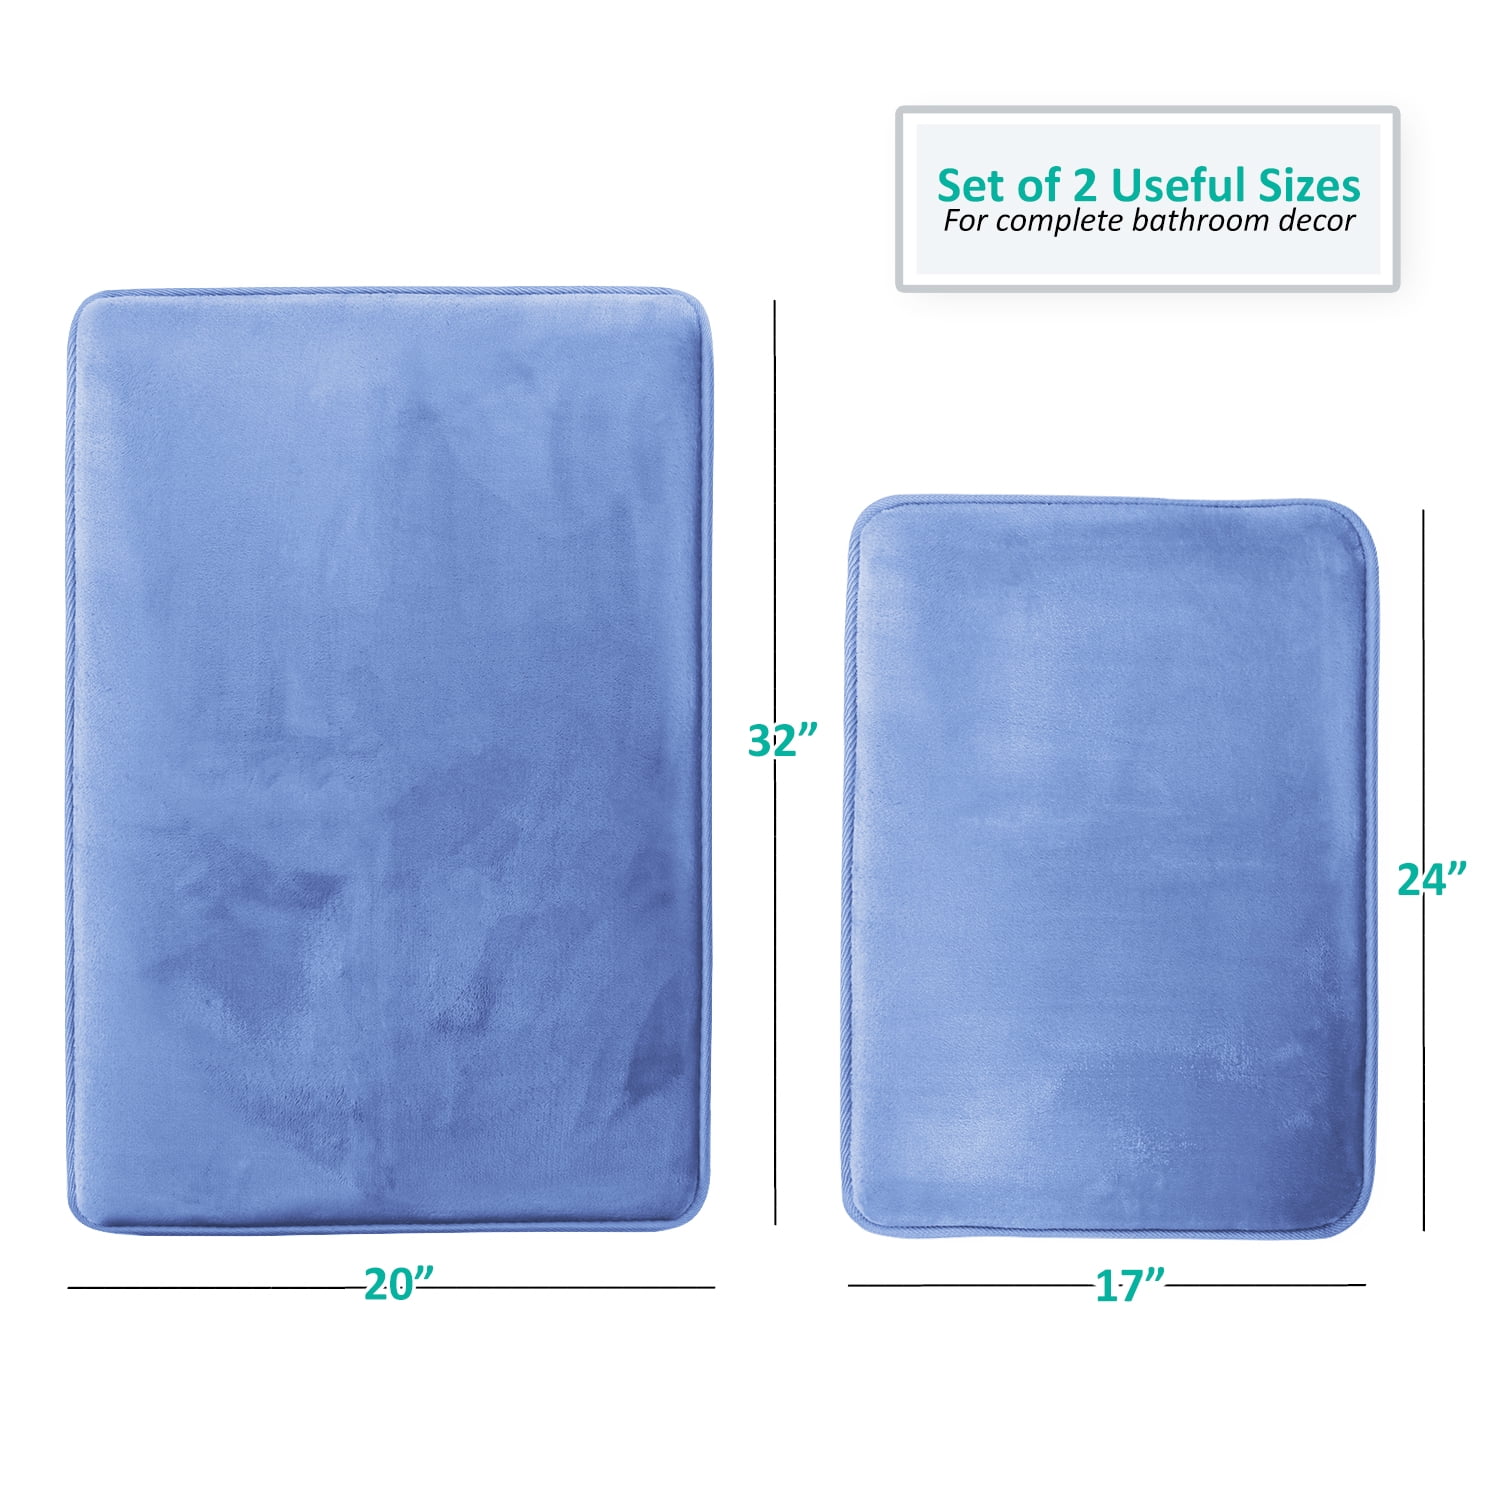 40x30cm Home Plush Nonslip Soft Heart Mat Flannel Carpet Bath Rug Memory Foam 